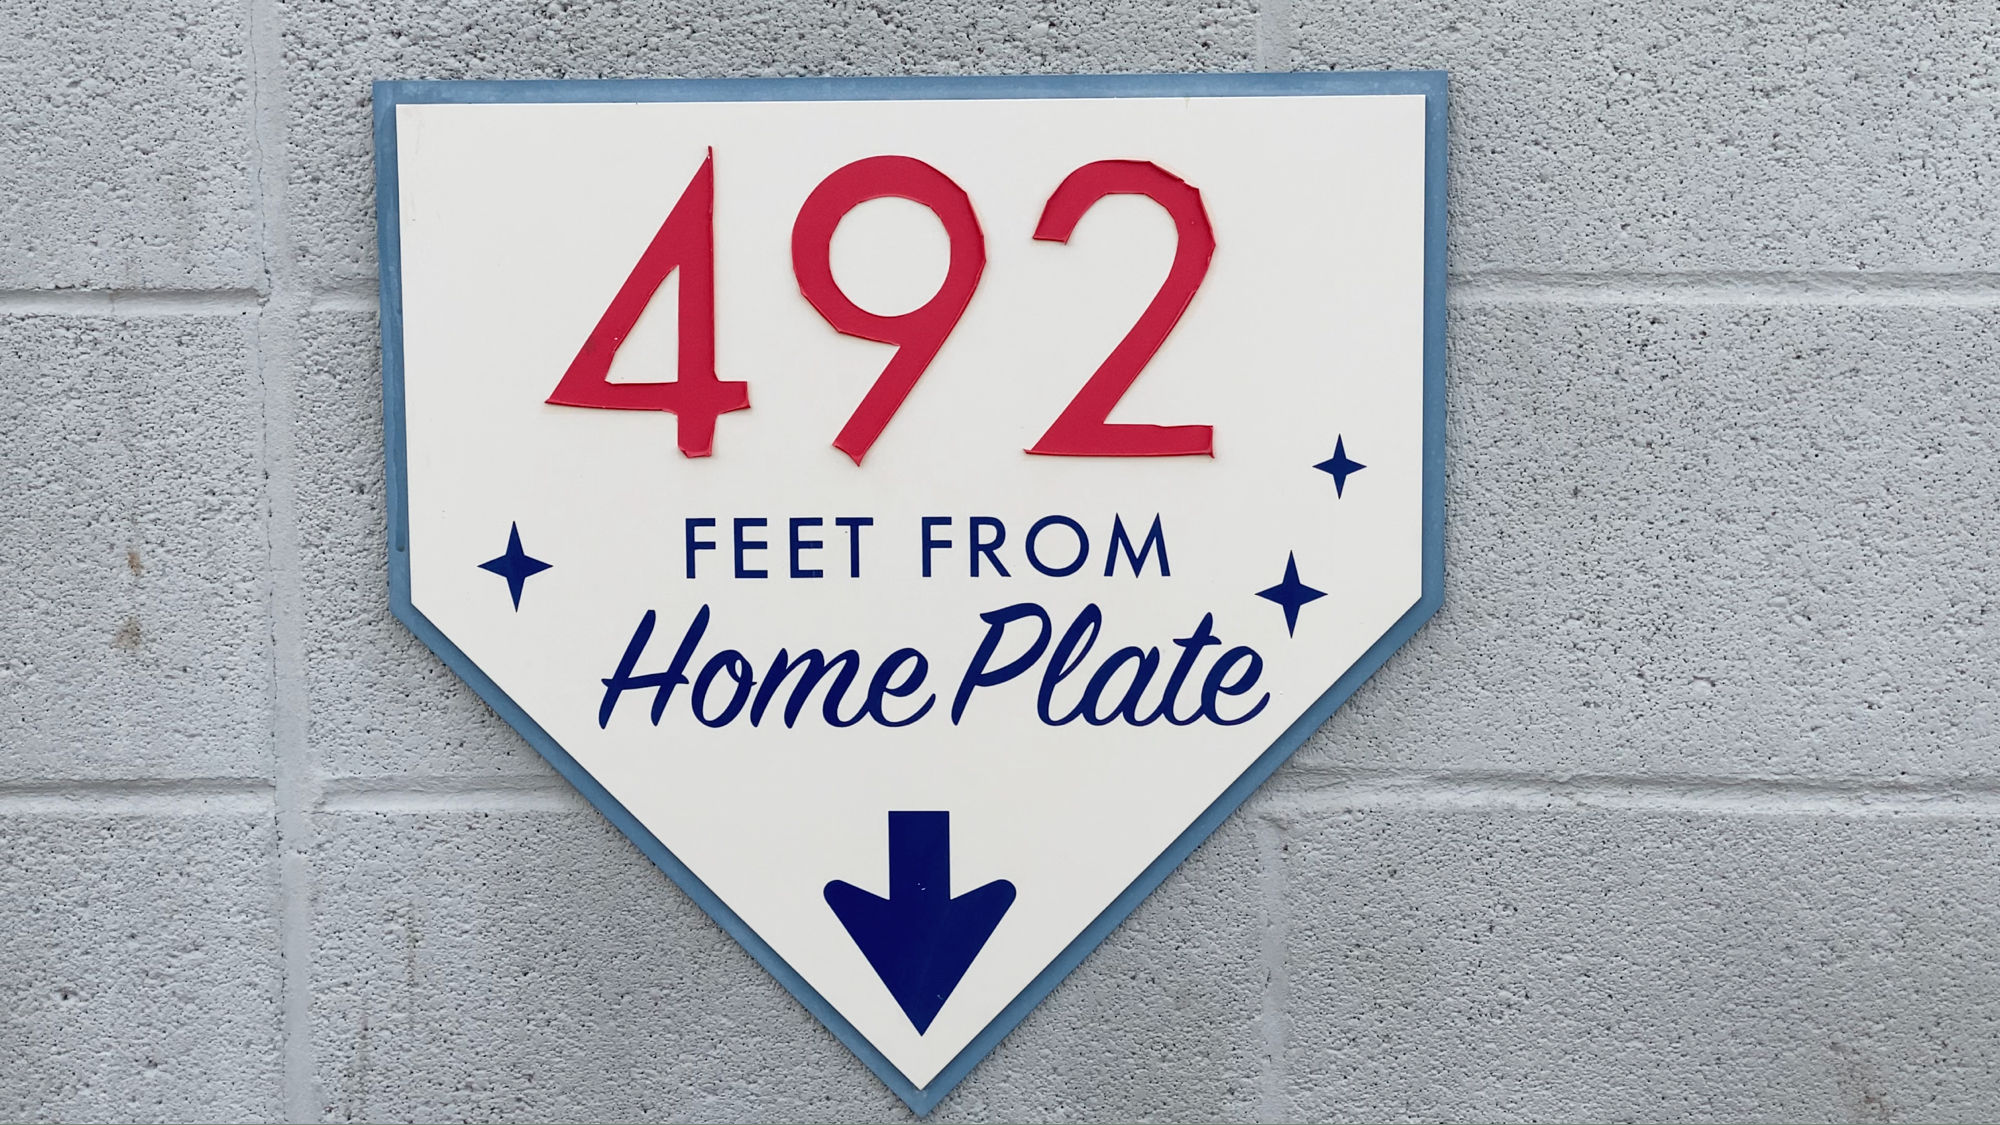 Dodger Stadium 492 Feet from Home Plate